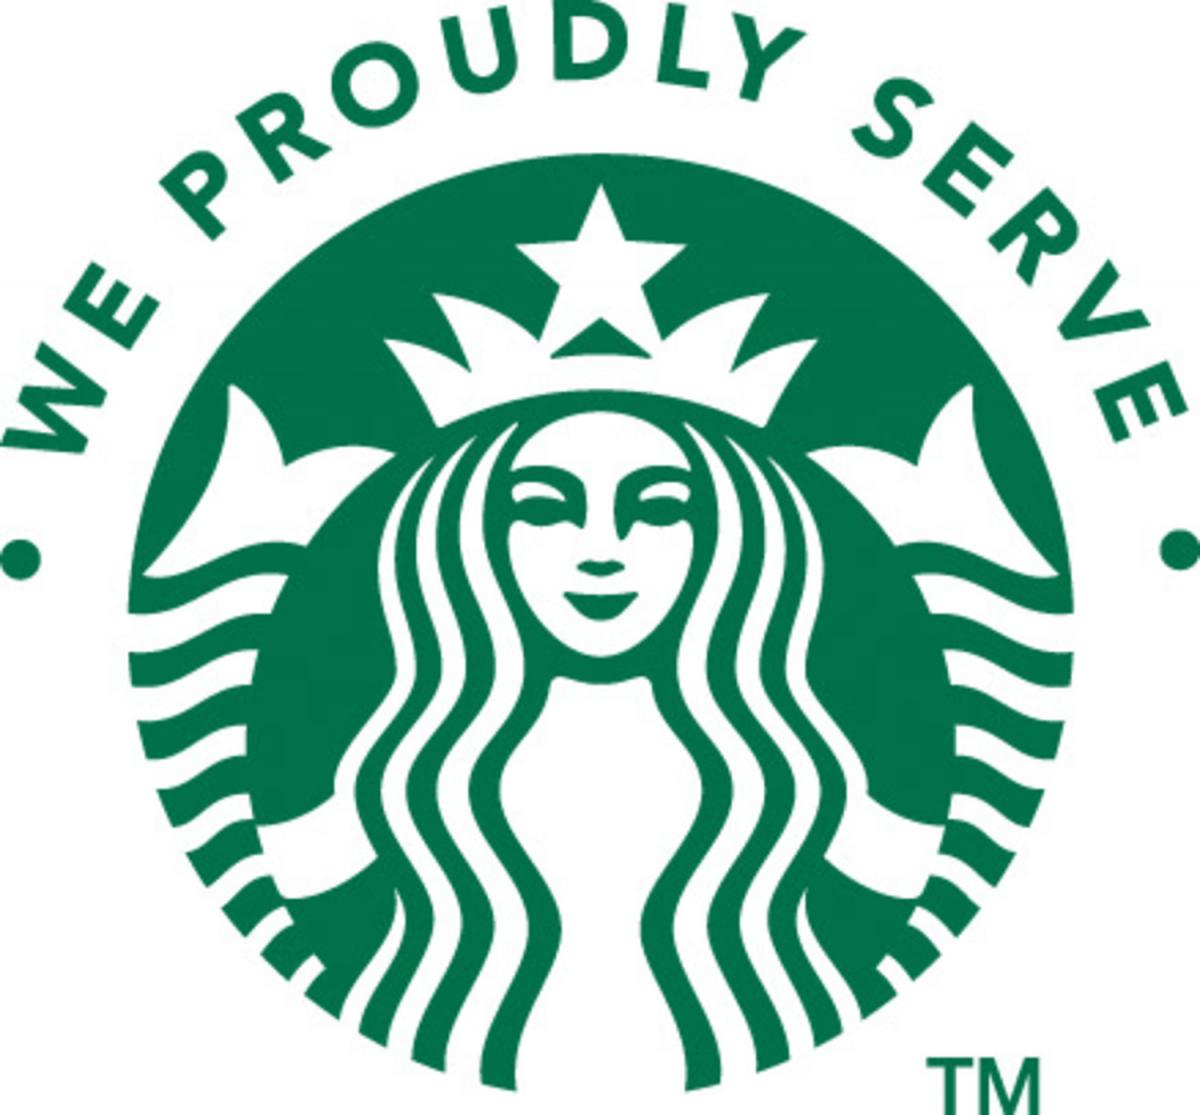 proudly serve starbucks logo